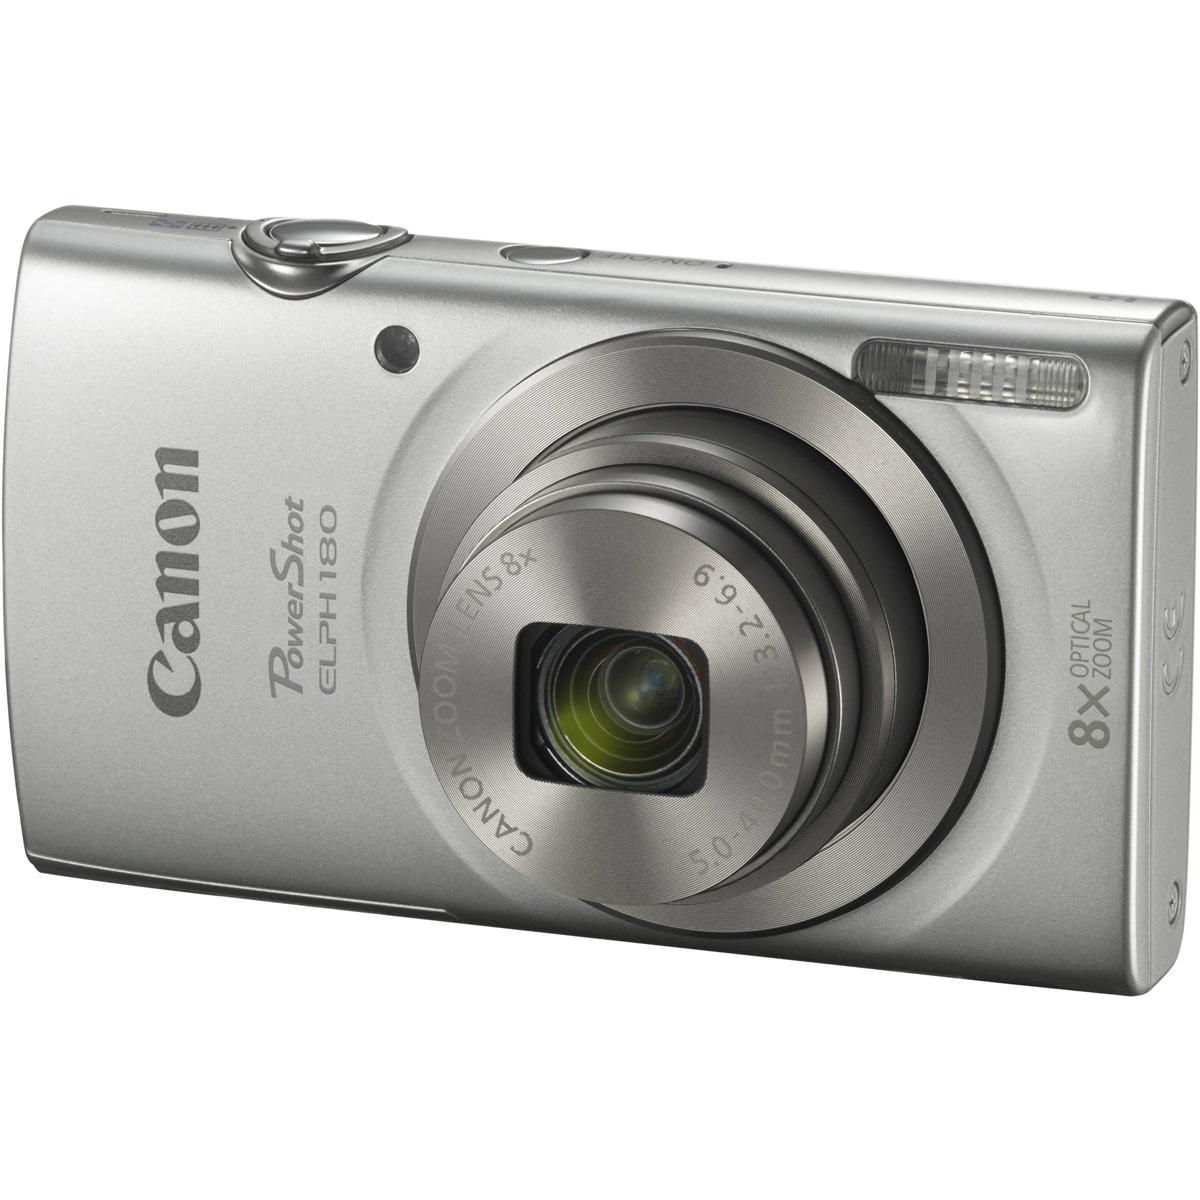 Canon PowerShot ELPH Digital Cameras for $49 Shipped